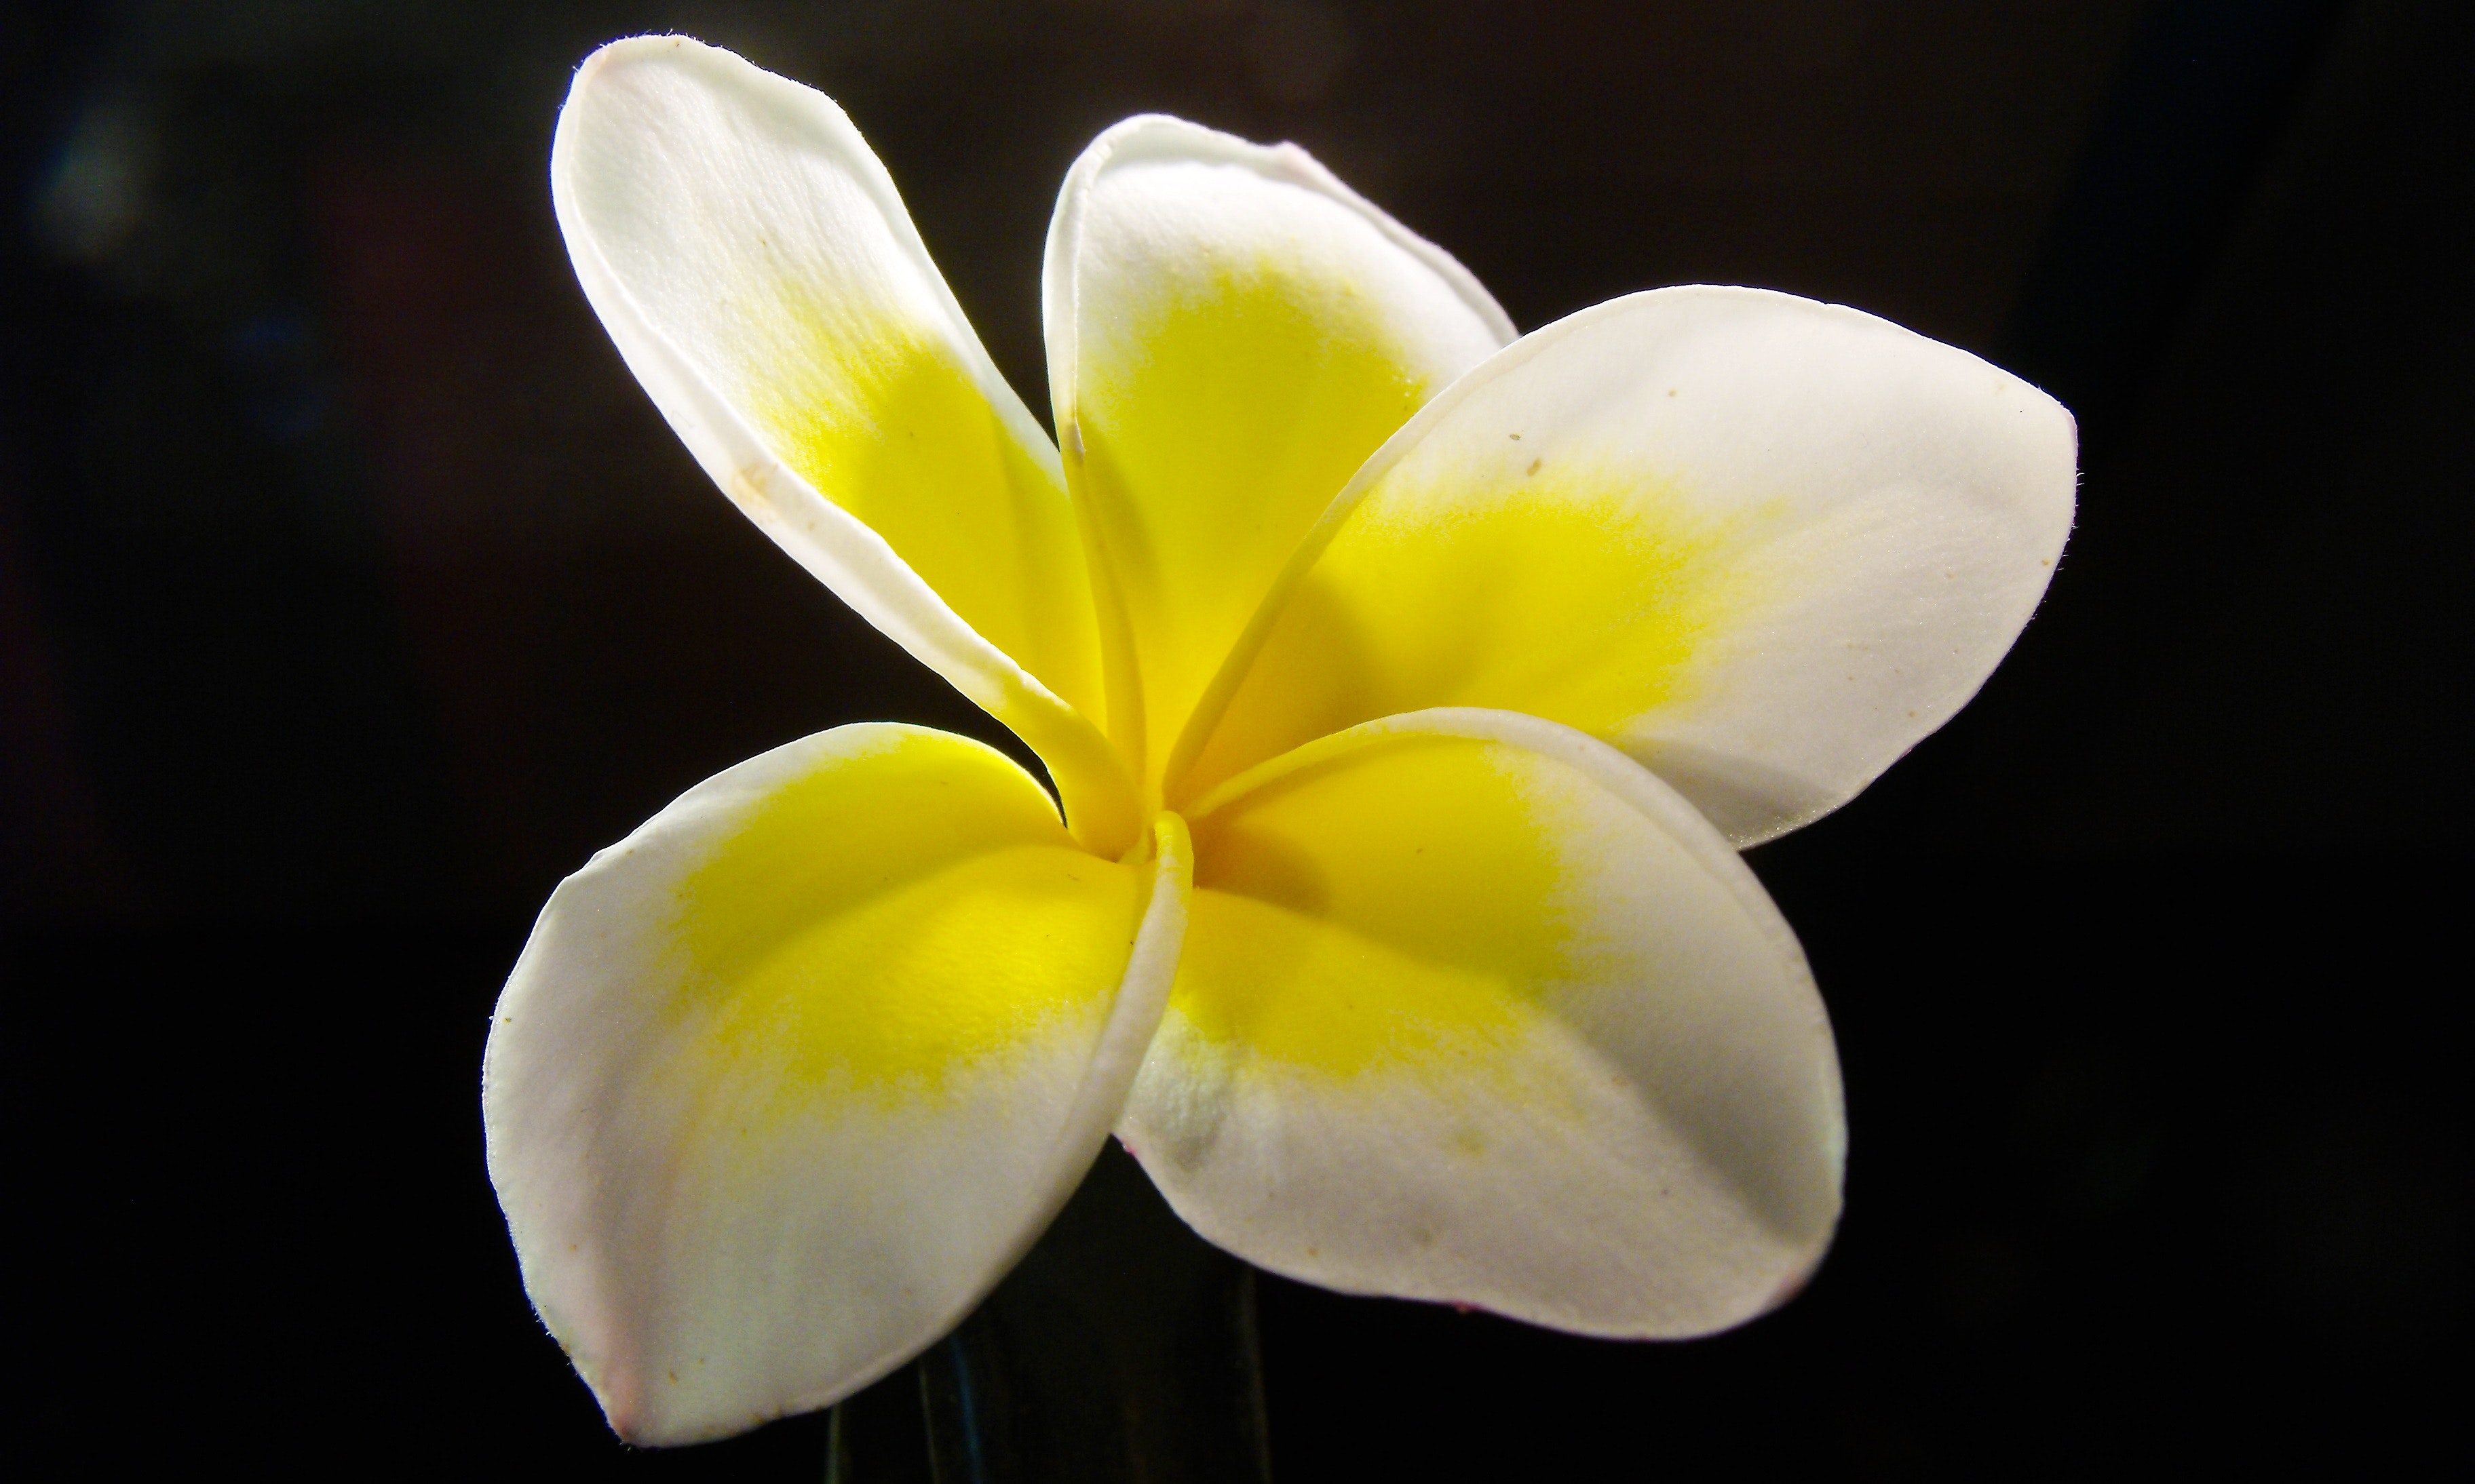 White and yellow flower photo